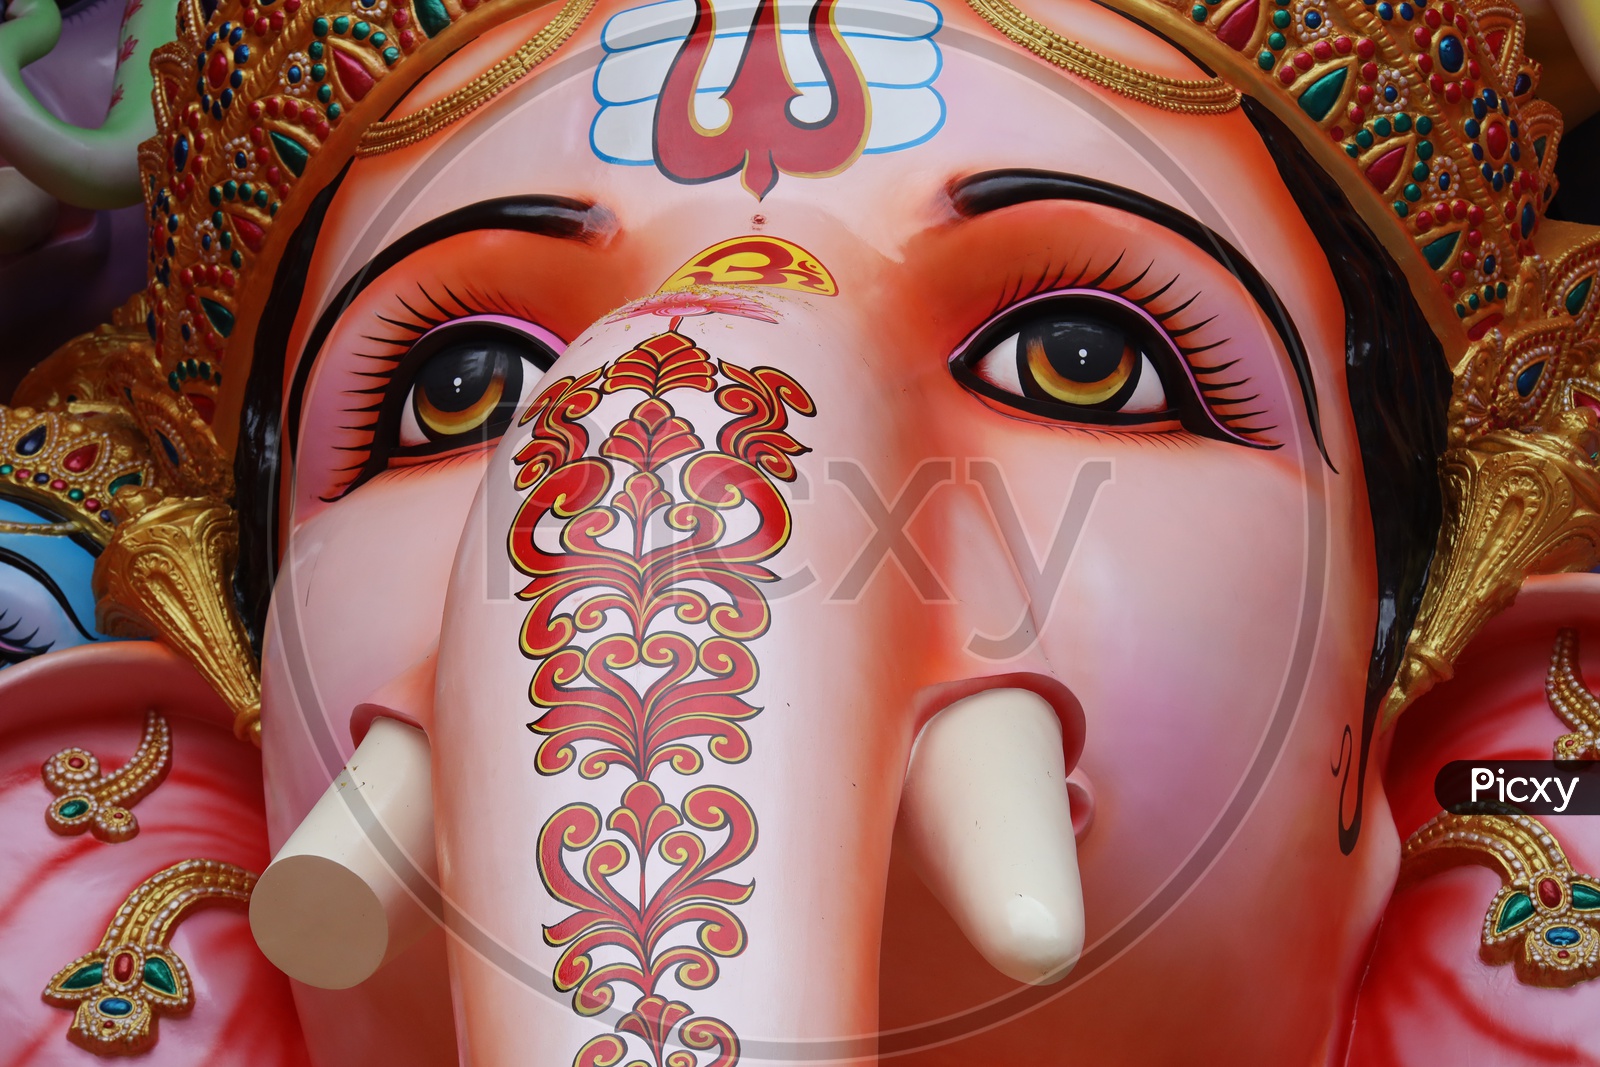 Sri Dwadashaditya Maha Ganapathi Idol In Khairatabad For Ganesh Chathurdhi Festival 2019 Closeup View